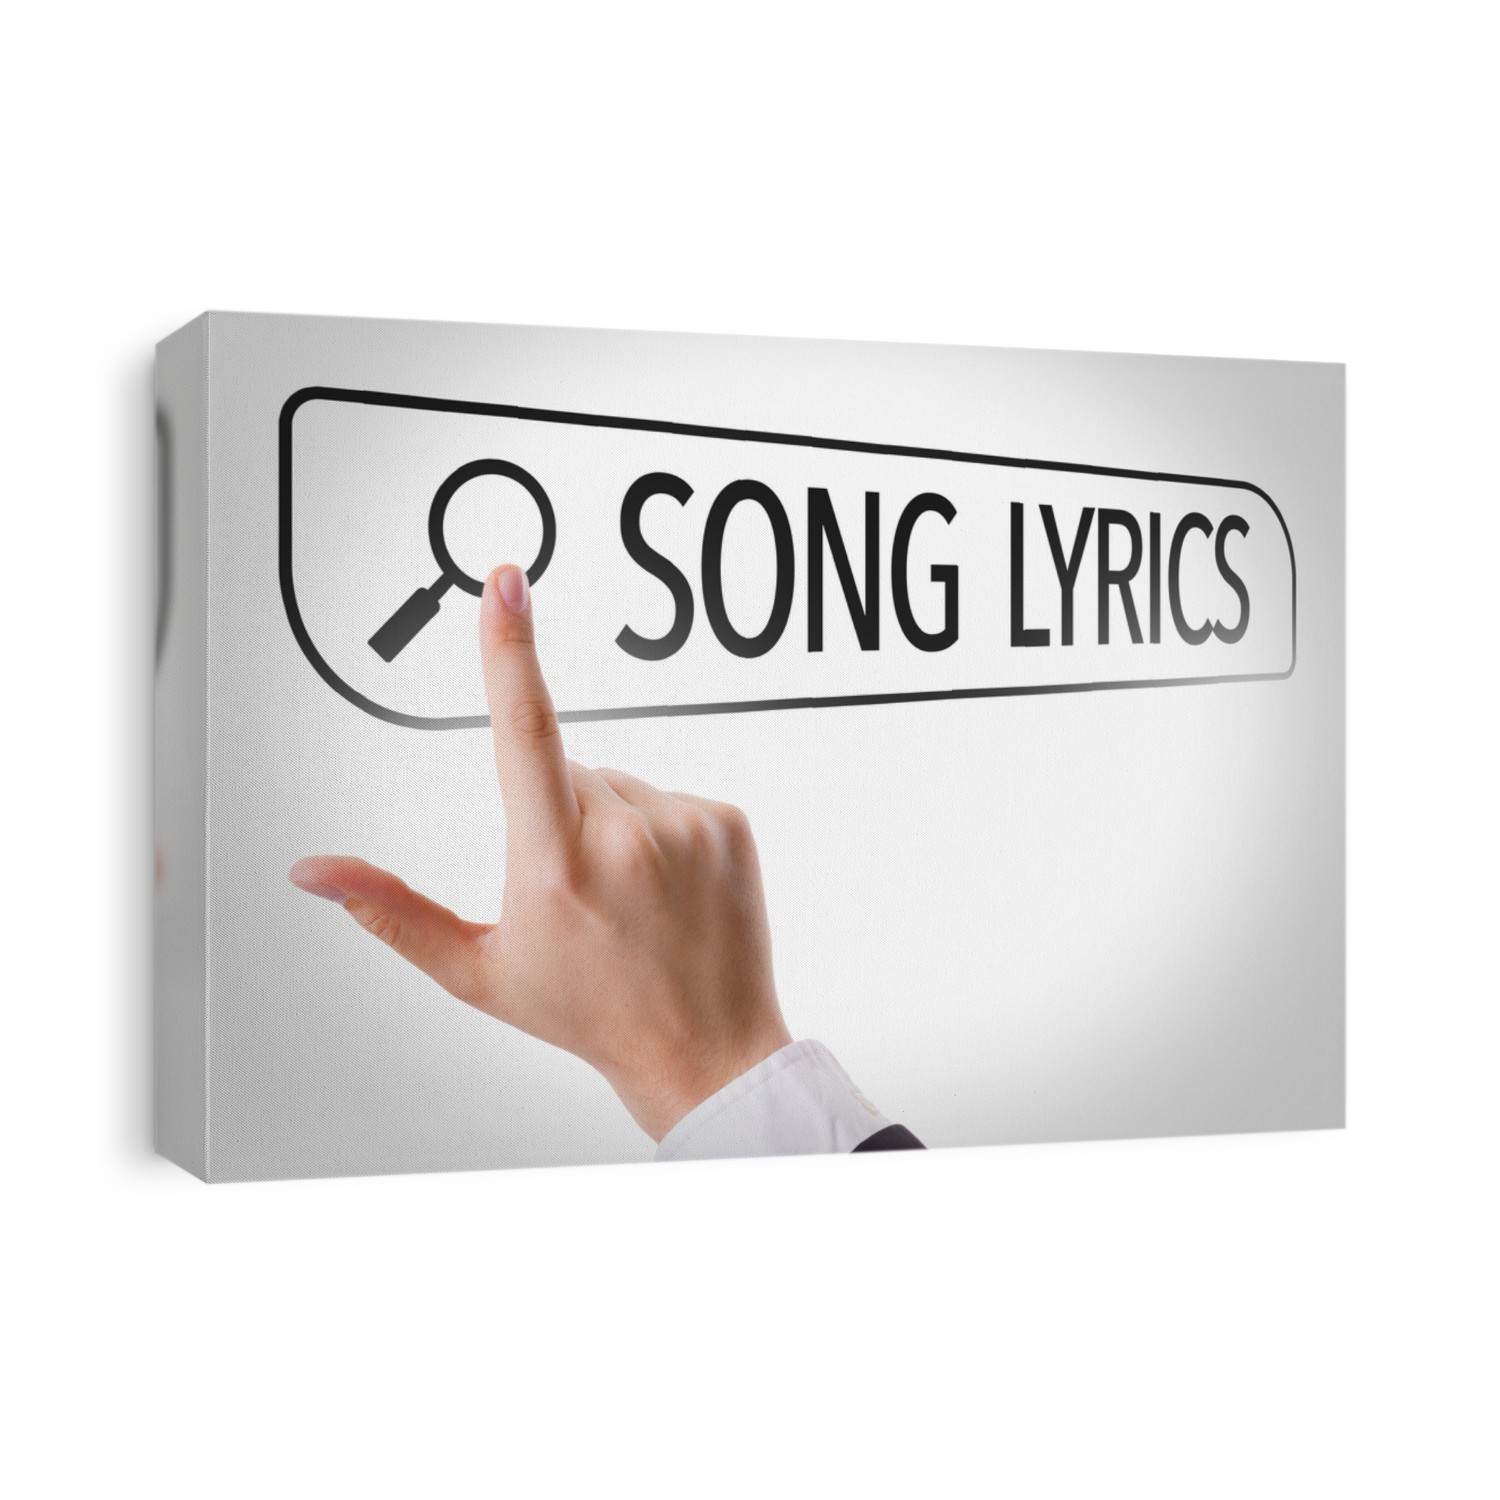 Song Lyrics written in search bar on virtual screen